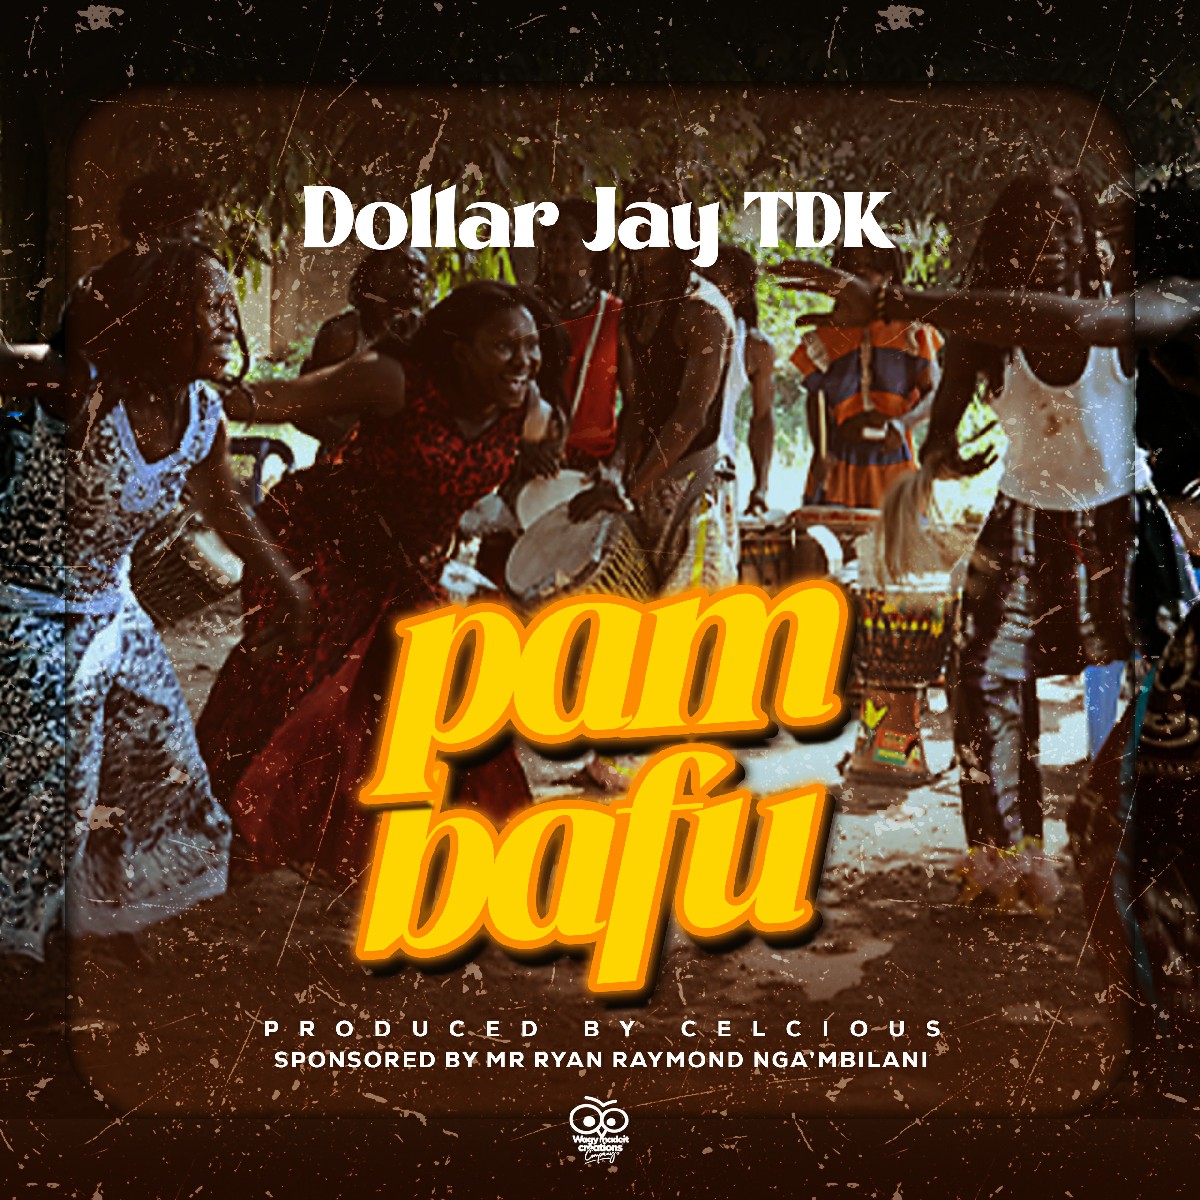 Dollar Jay TDK - Pambafu (Prod. Celcious)